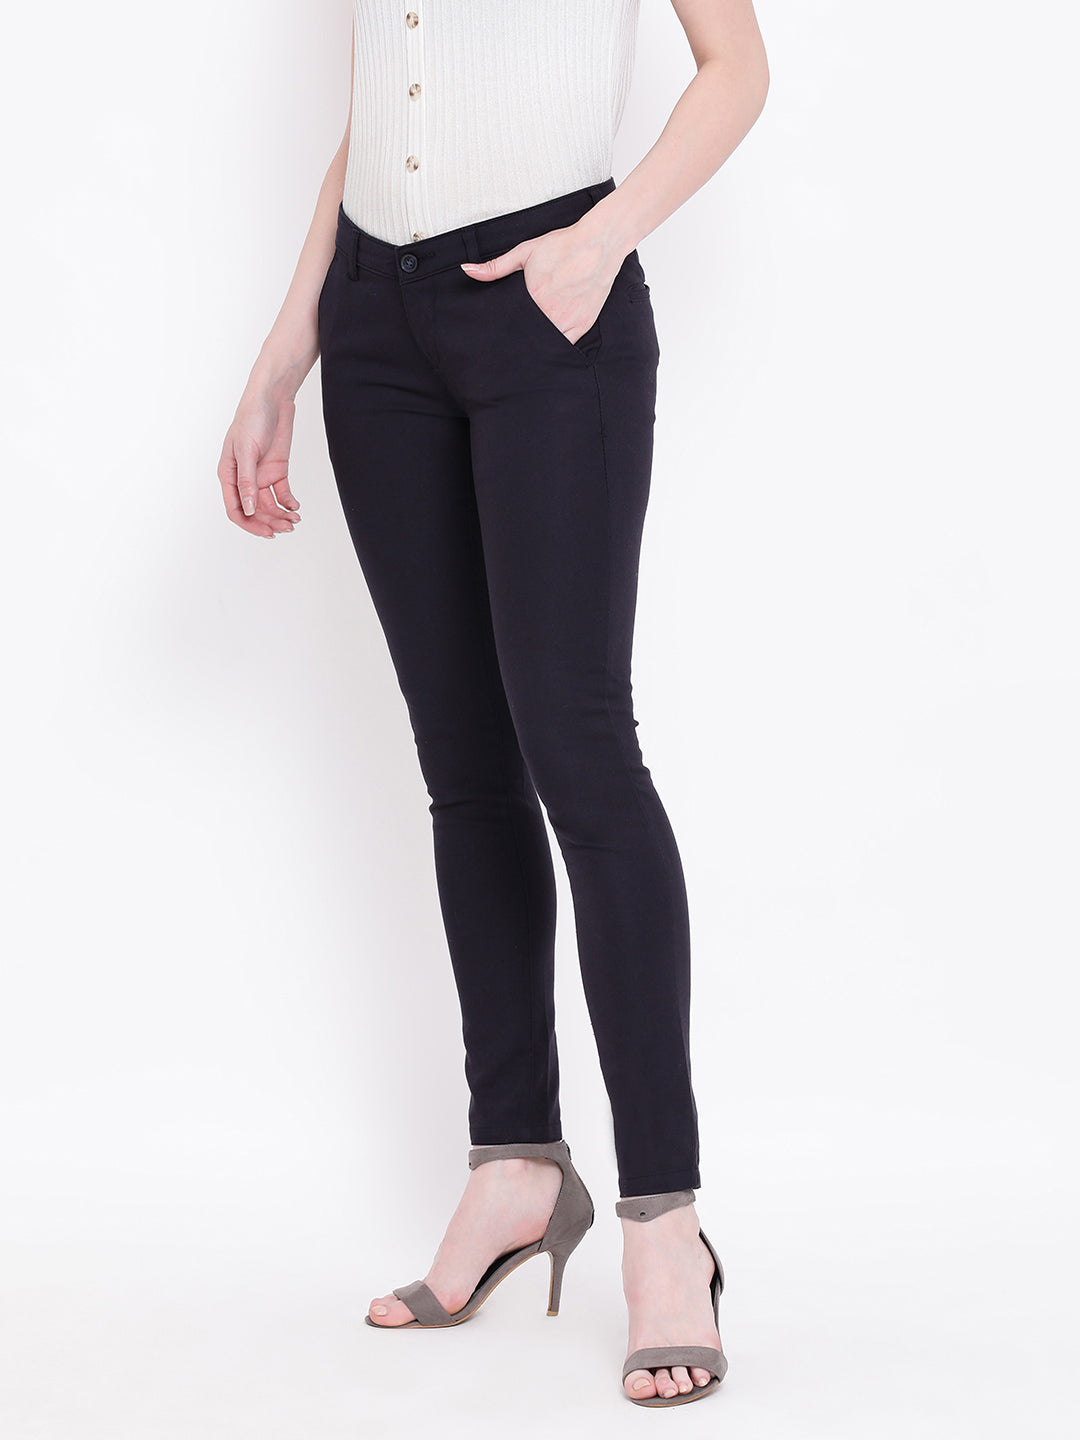 Black Slim Fit Trousers - Women Trousers